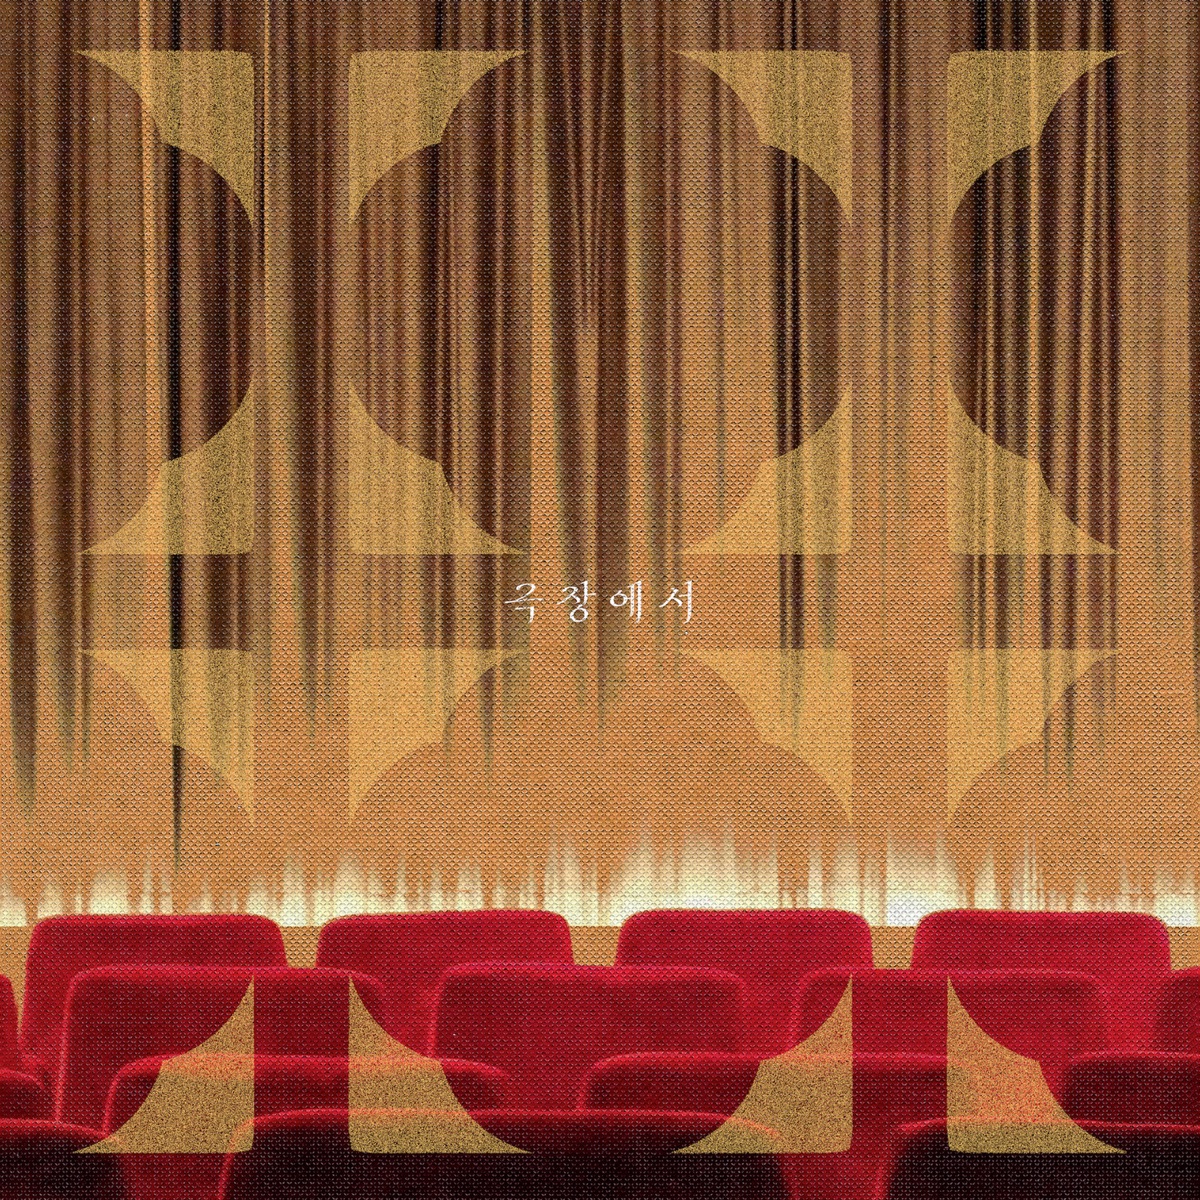 KIM JAE HYUNG – at the theater – Single